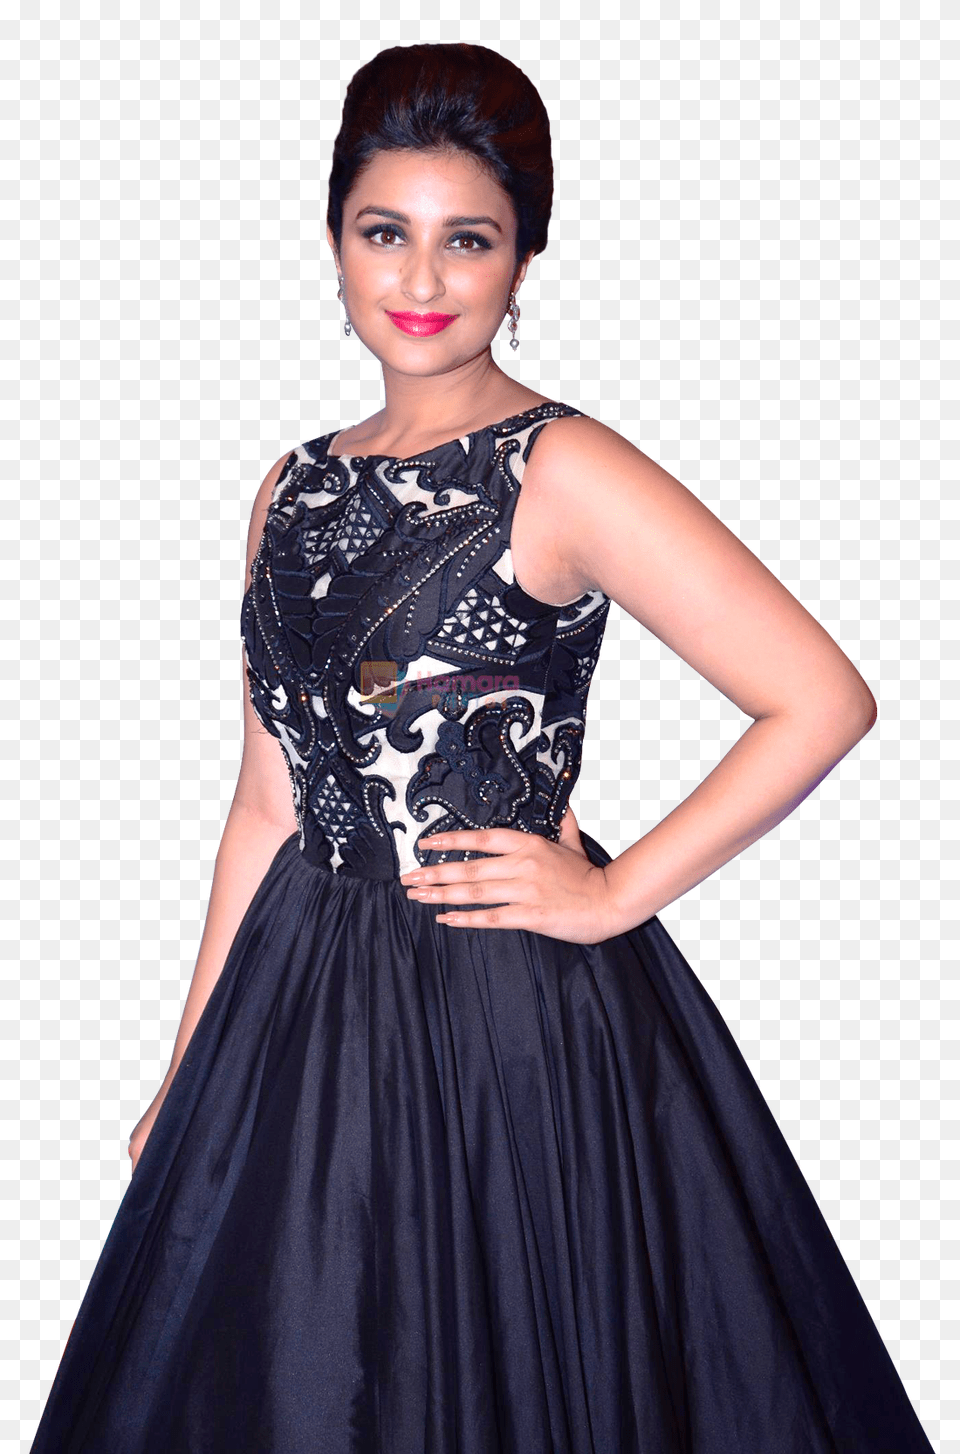 Pngpix Com Parineeti Chopra Clothing, Dress, Evening Dress, Fashion Png Image